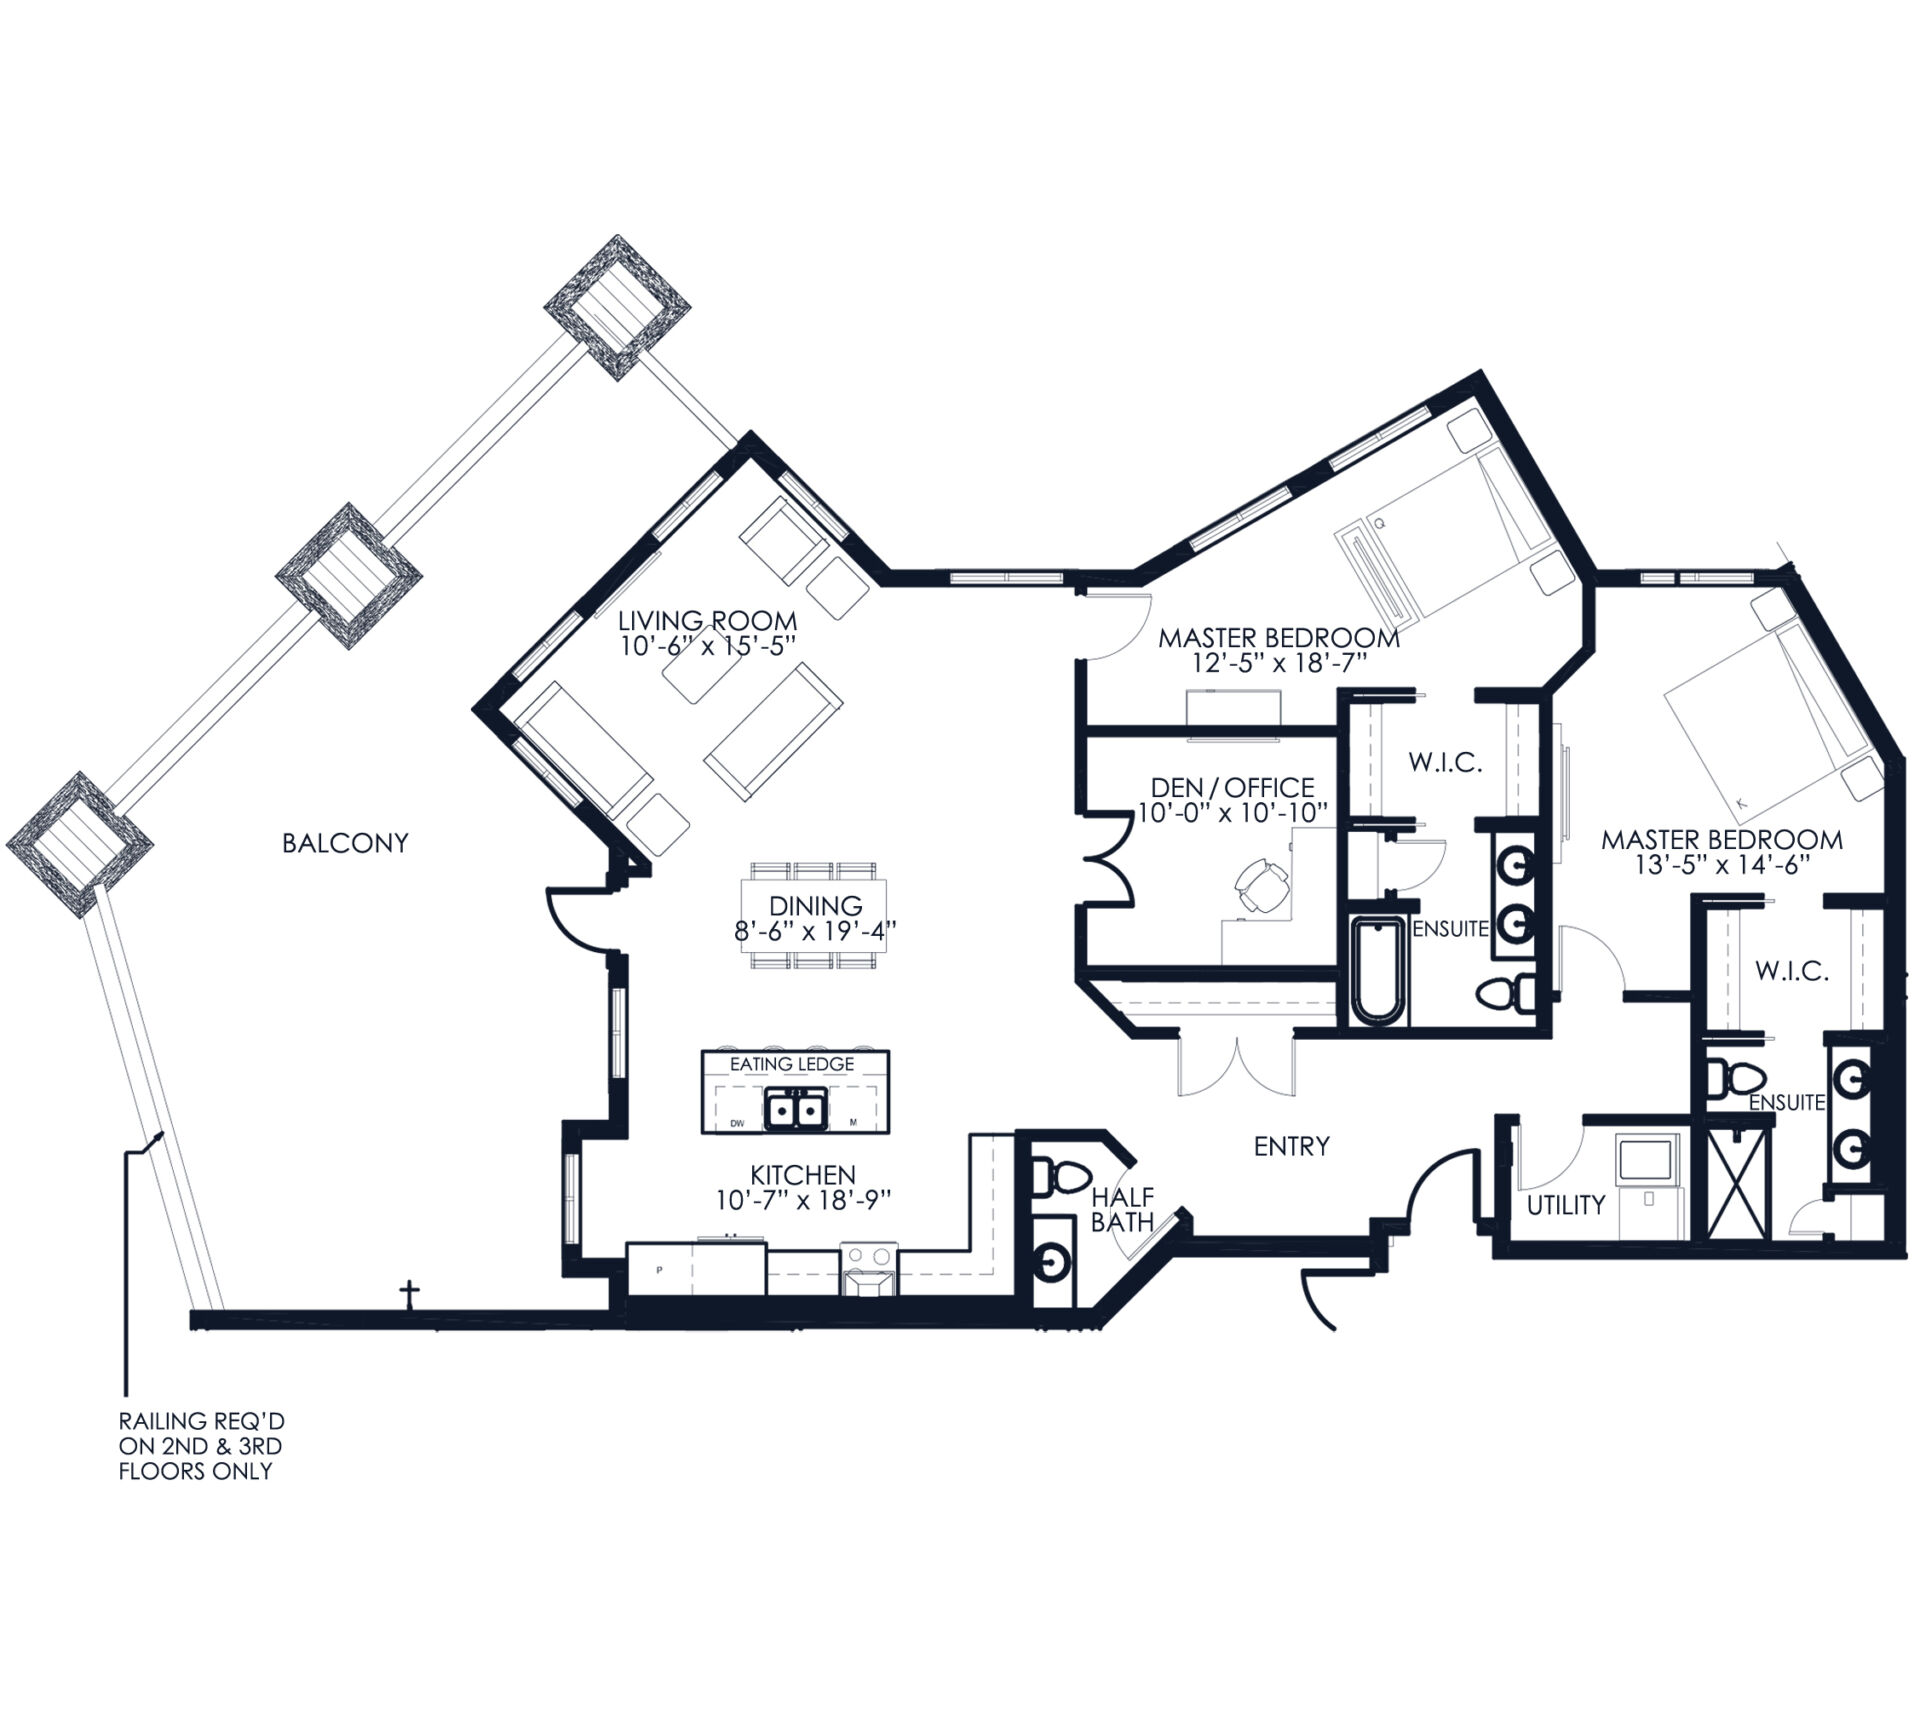 Unit A114-214-314 floor plan